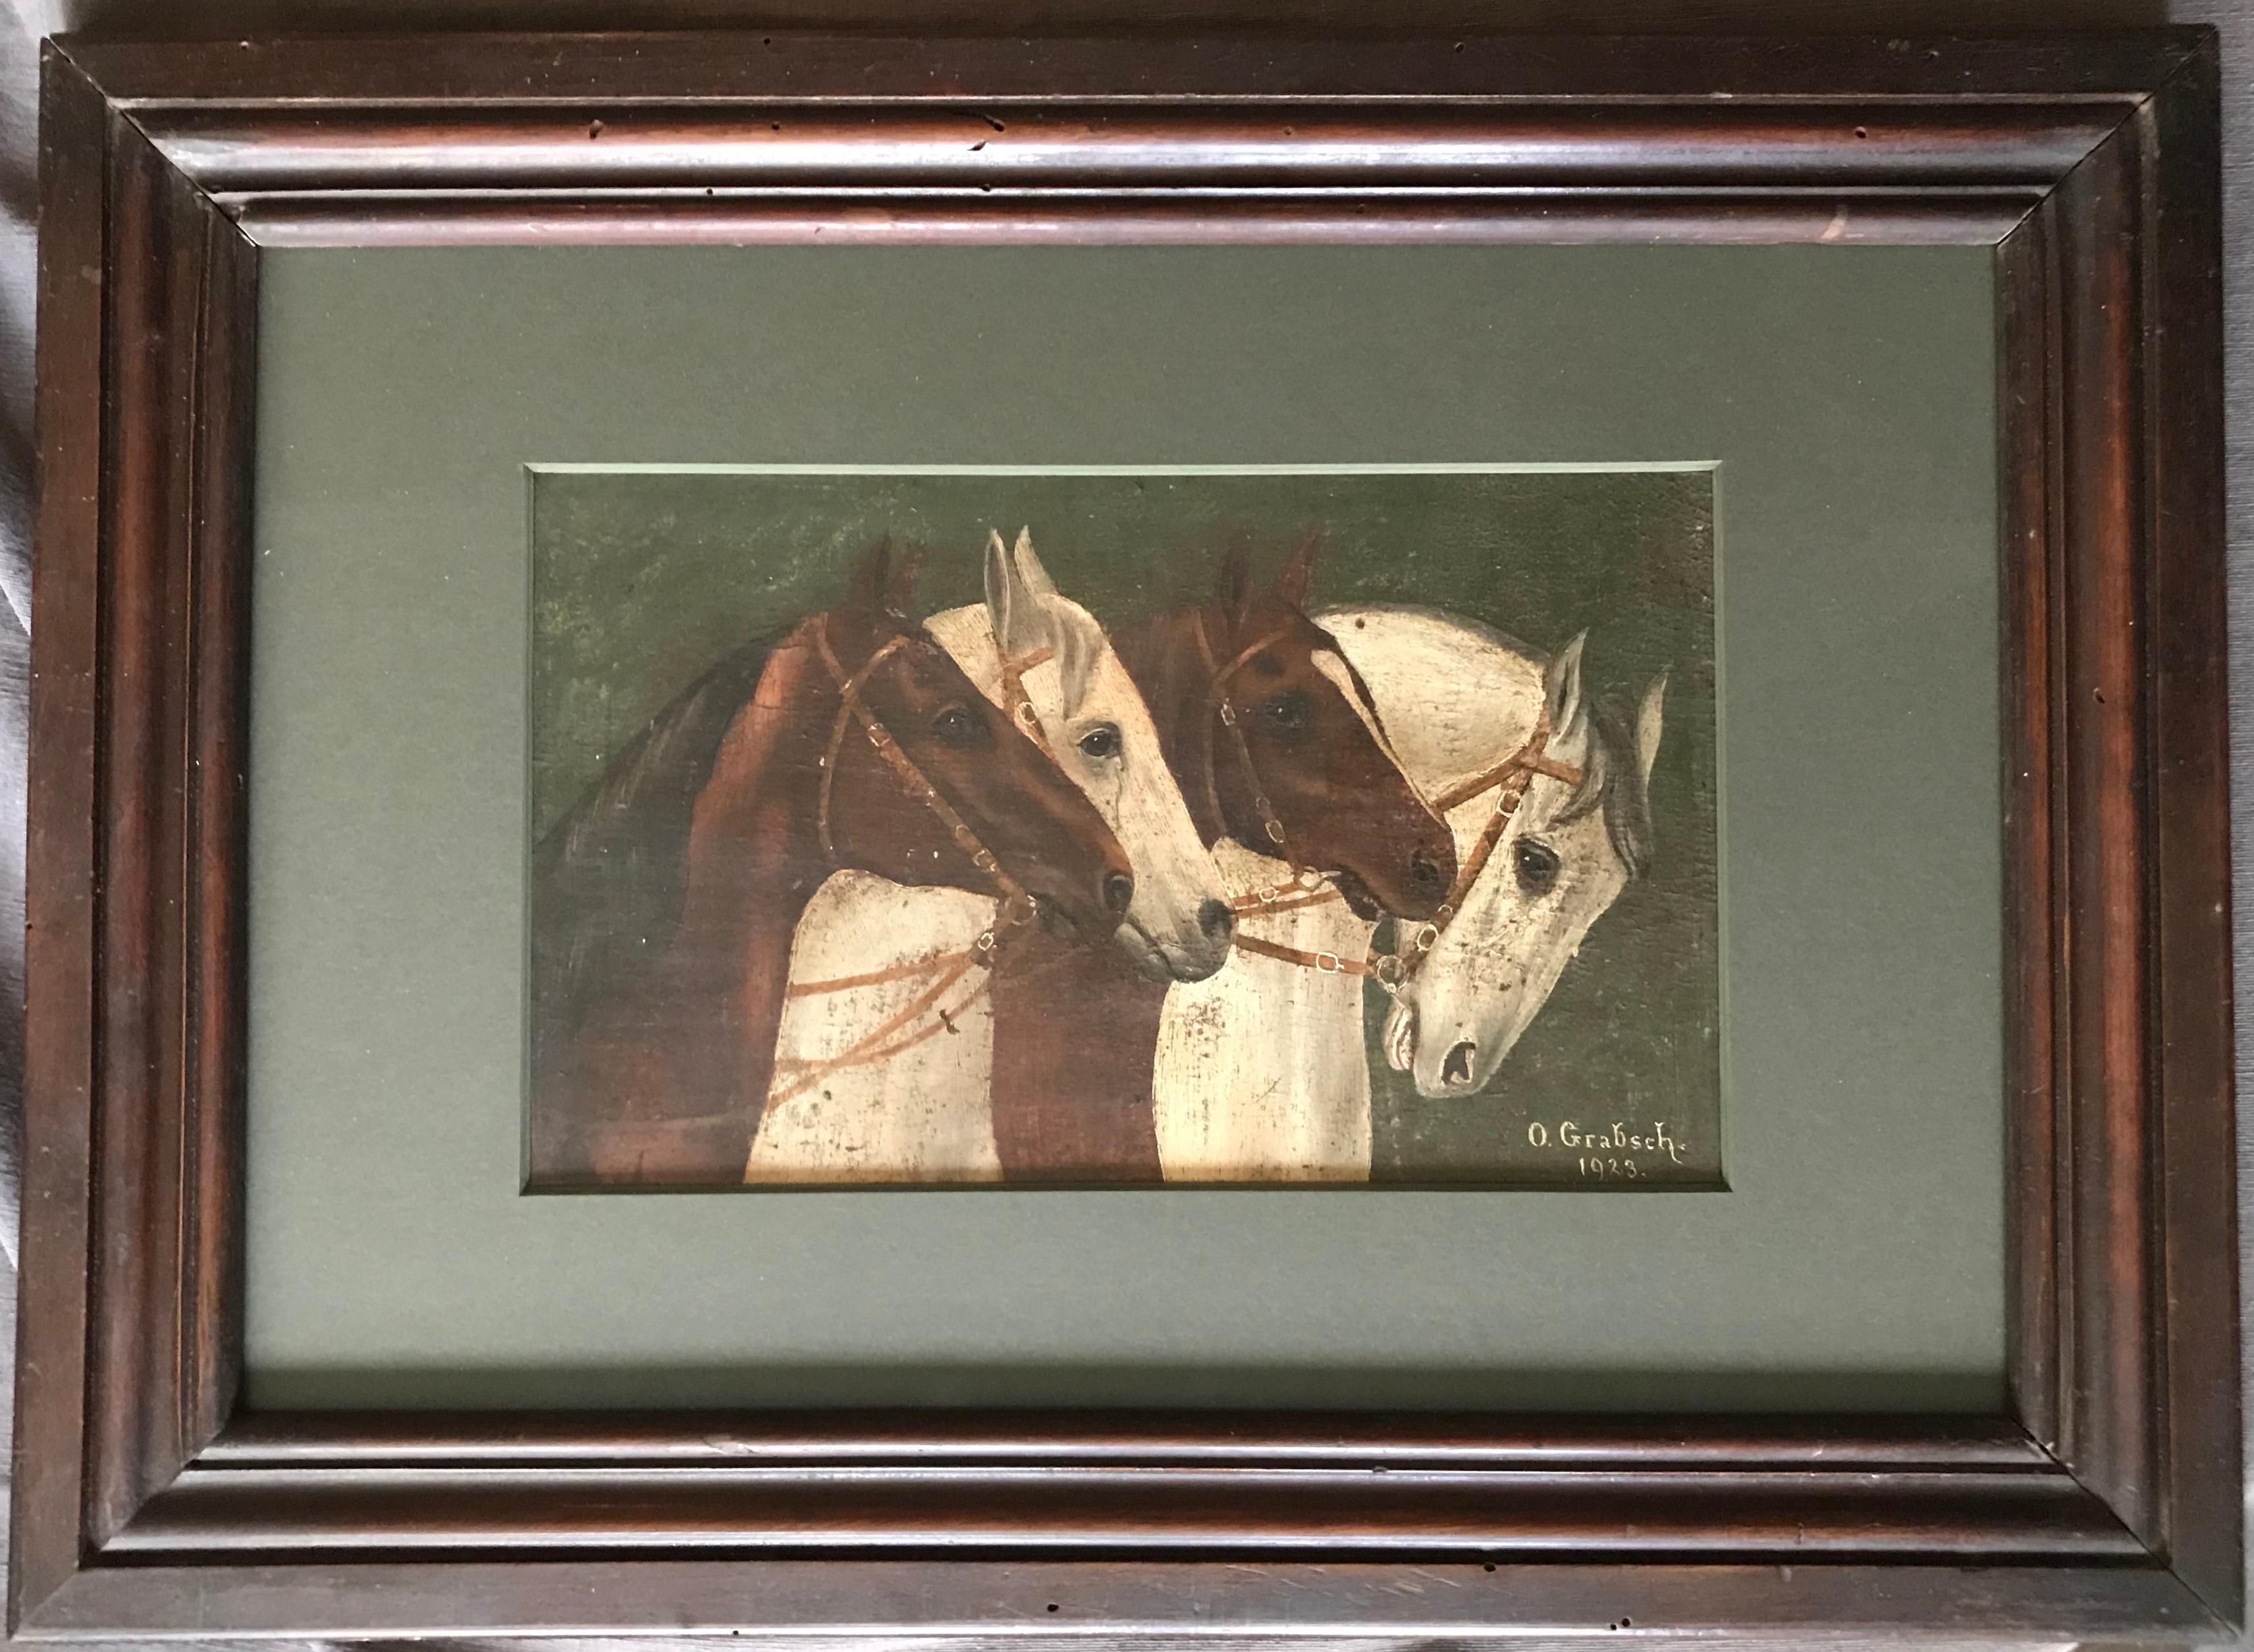 European Four Horses, O.Grabsch 1923 For Sale